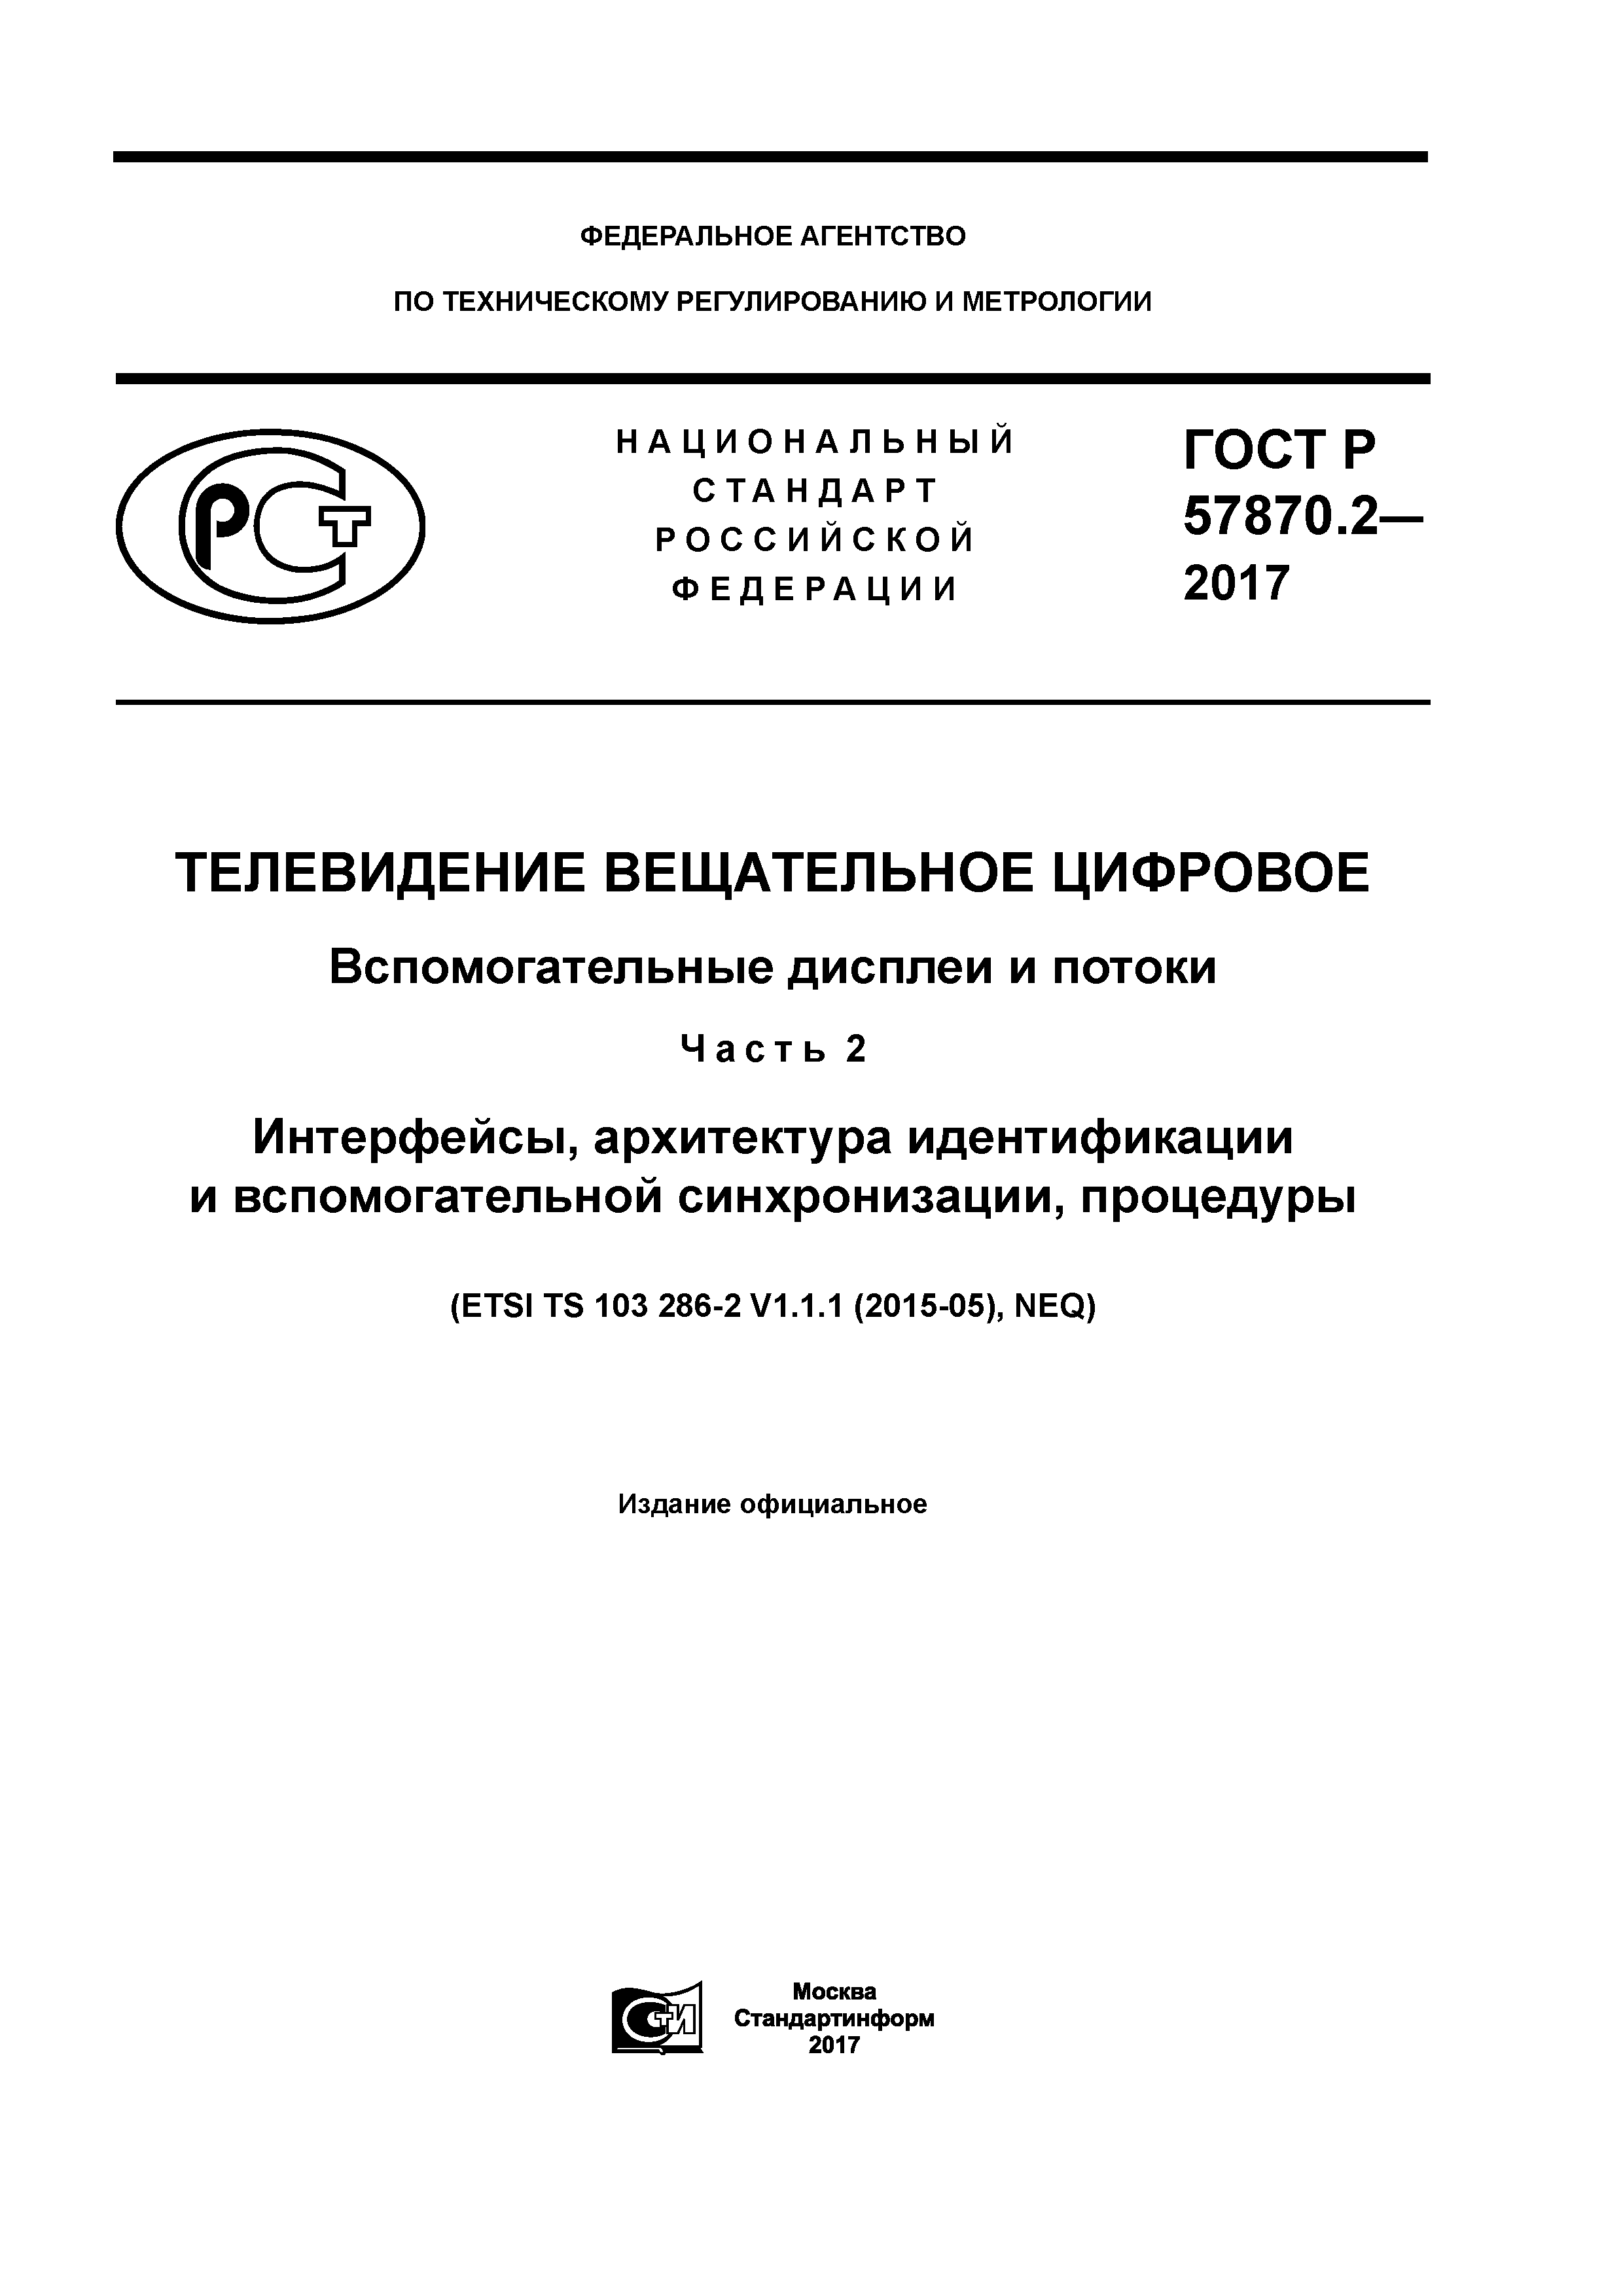 ГОСТ Р 57870.2-2017